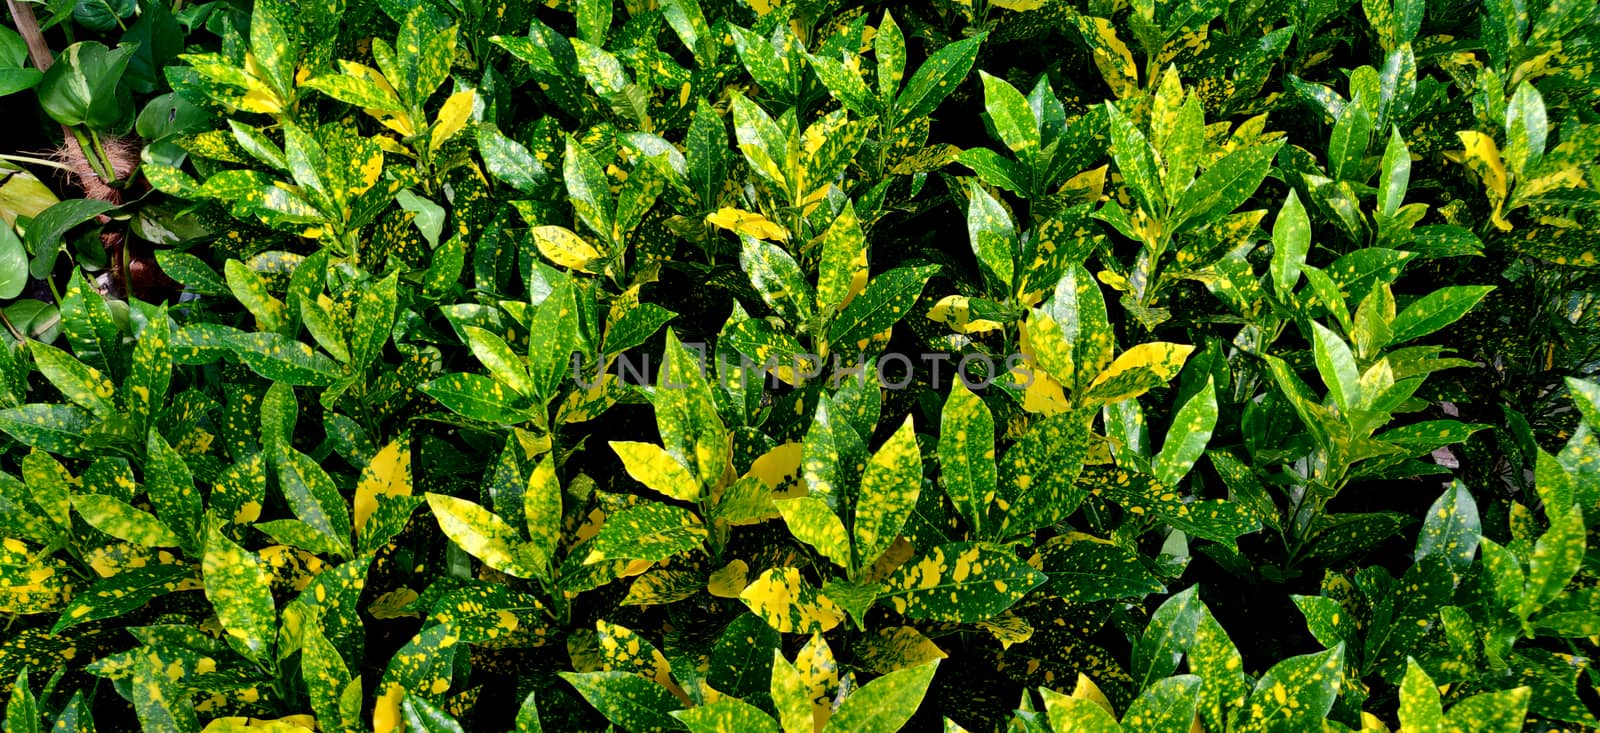 Green Garden corton, Japanese laurel plants of different shade inside the plant nursery in New Delhi, India